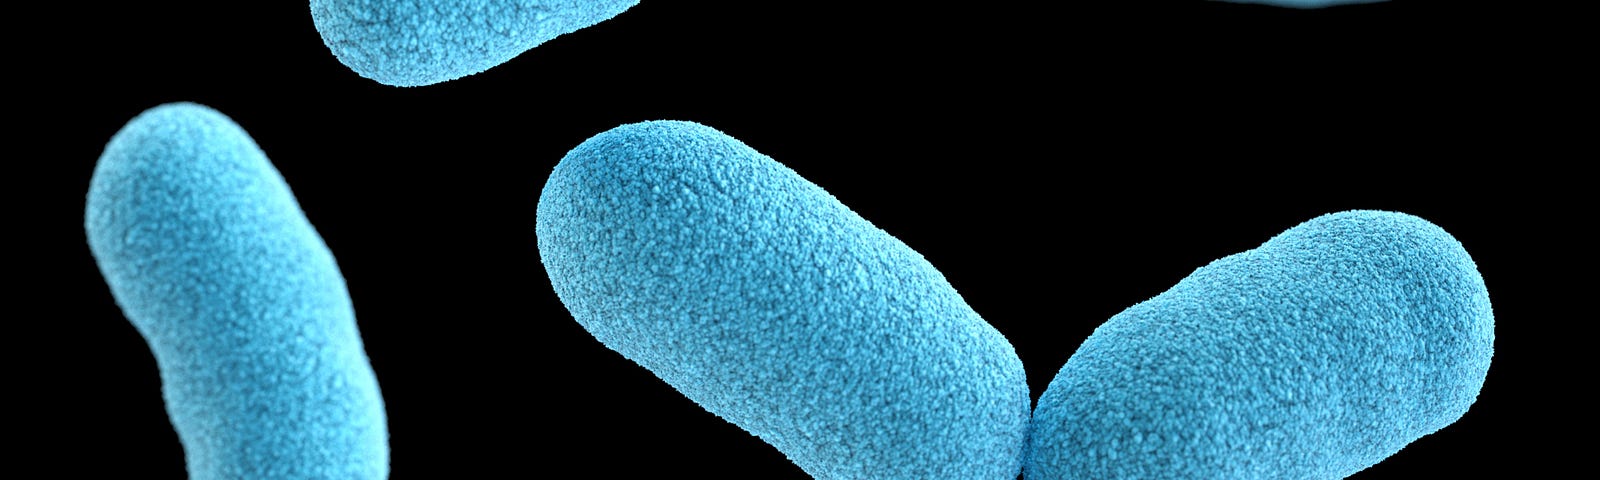 microscope photo of bacteria